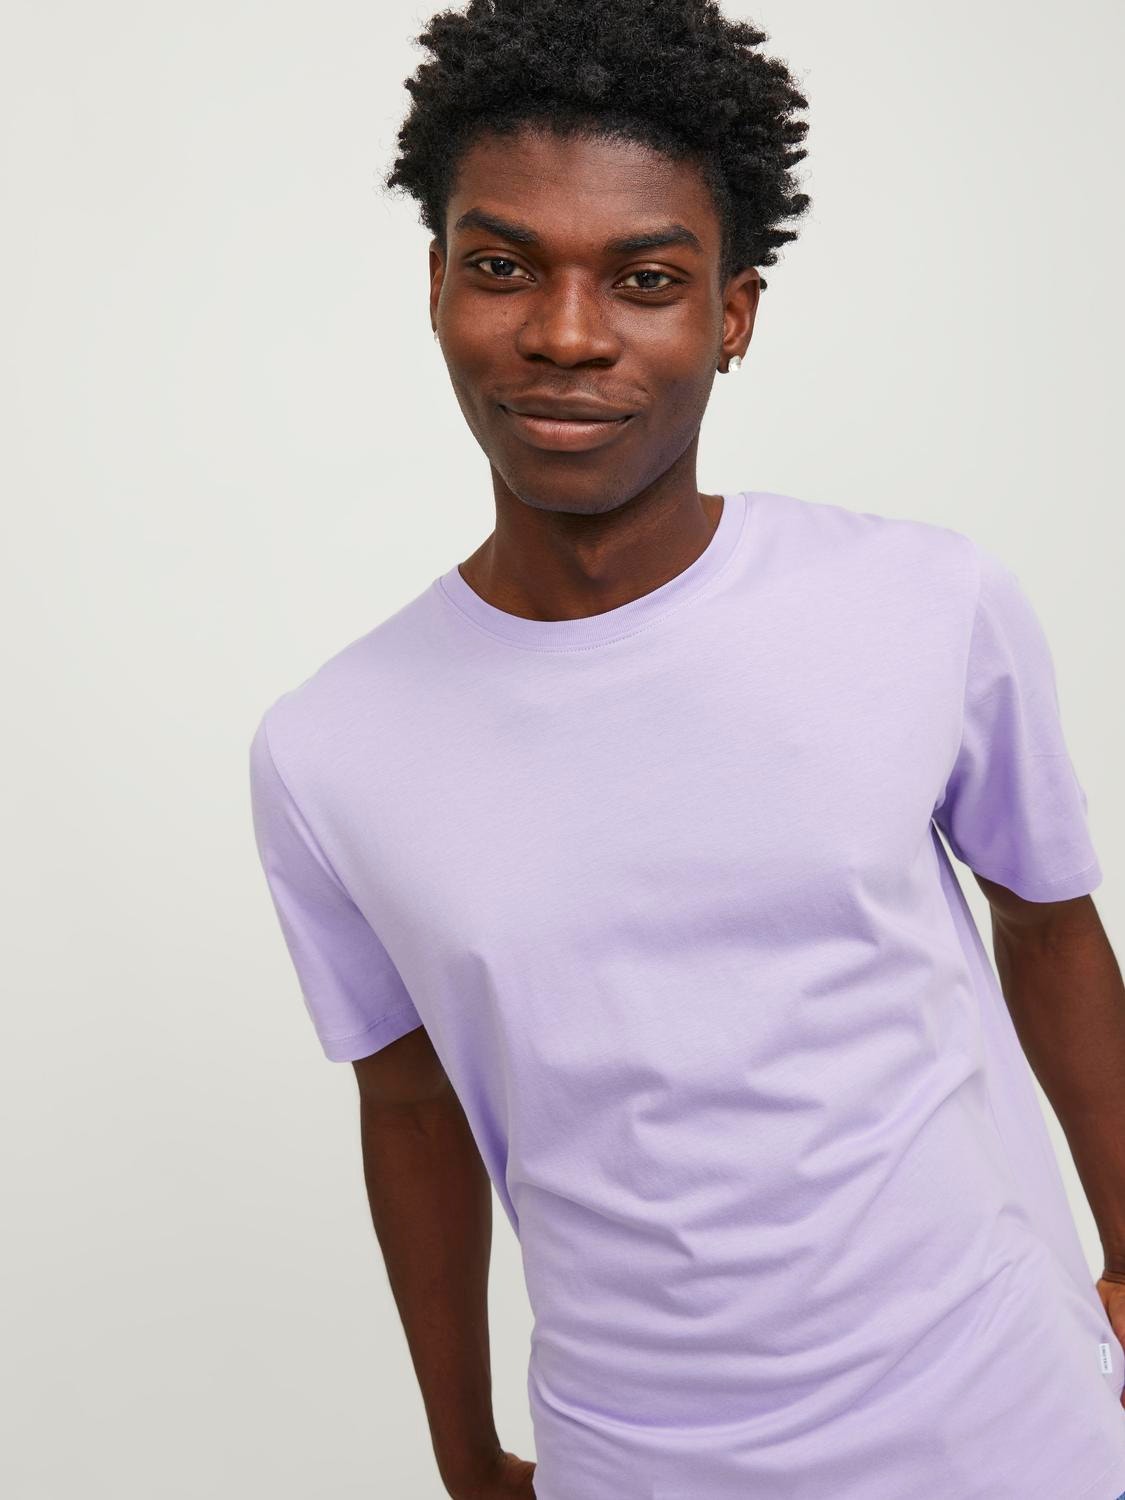 Jack & Jones Plain Crew neck T-shirt -Purple Rose - 12156101